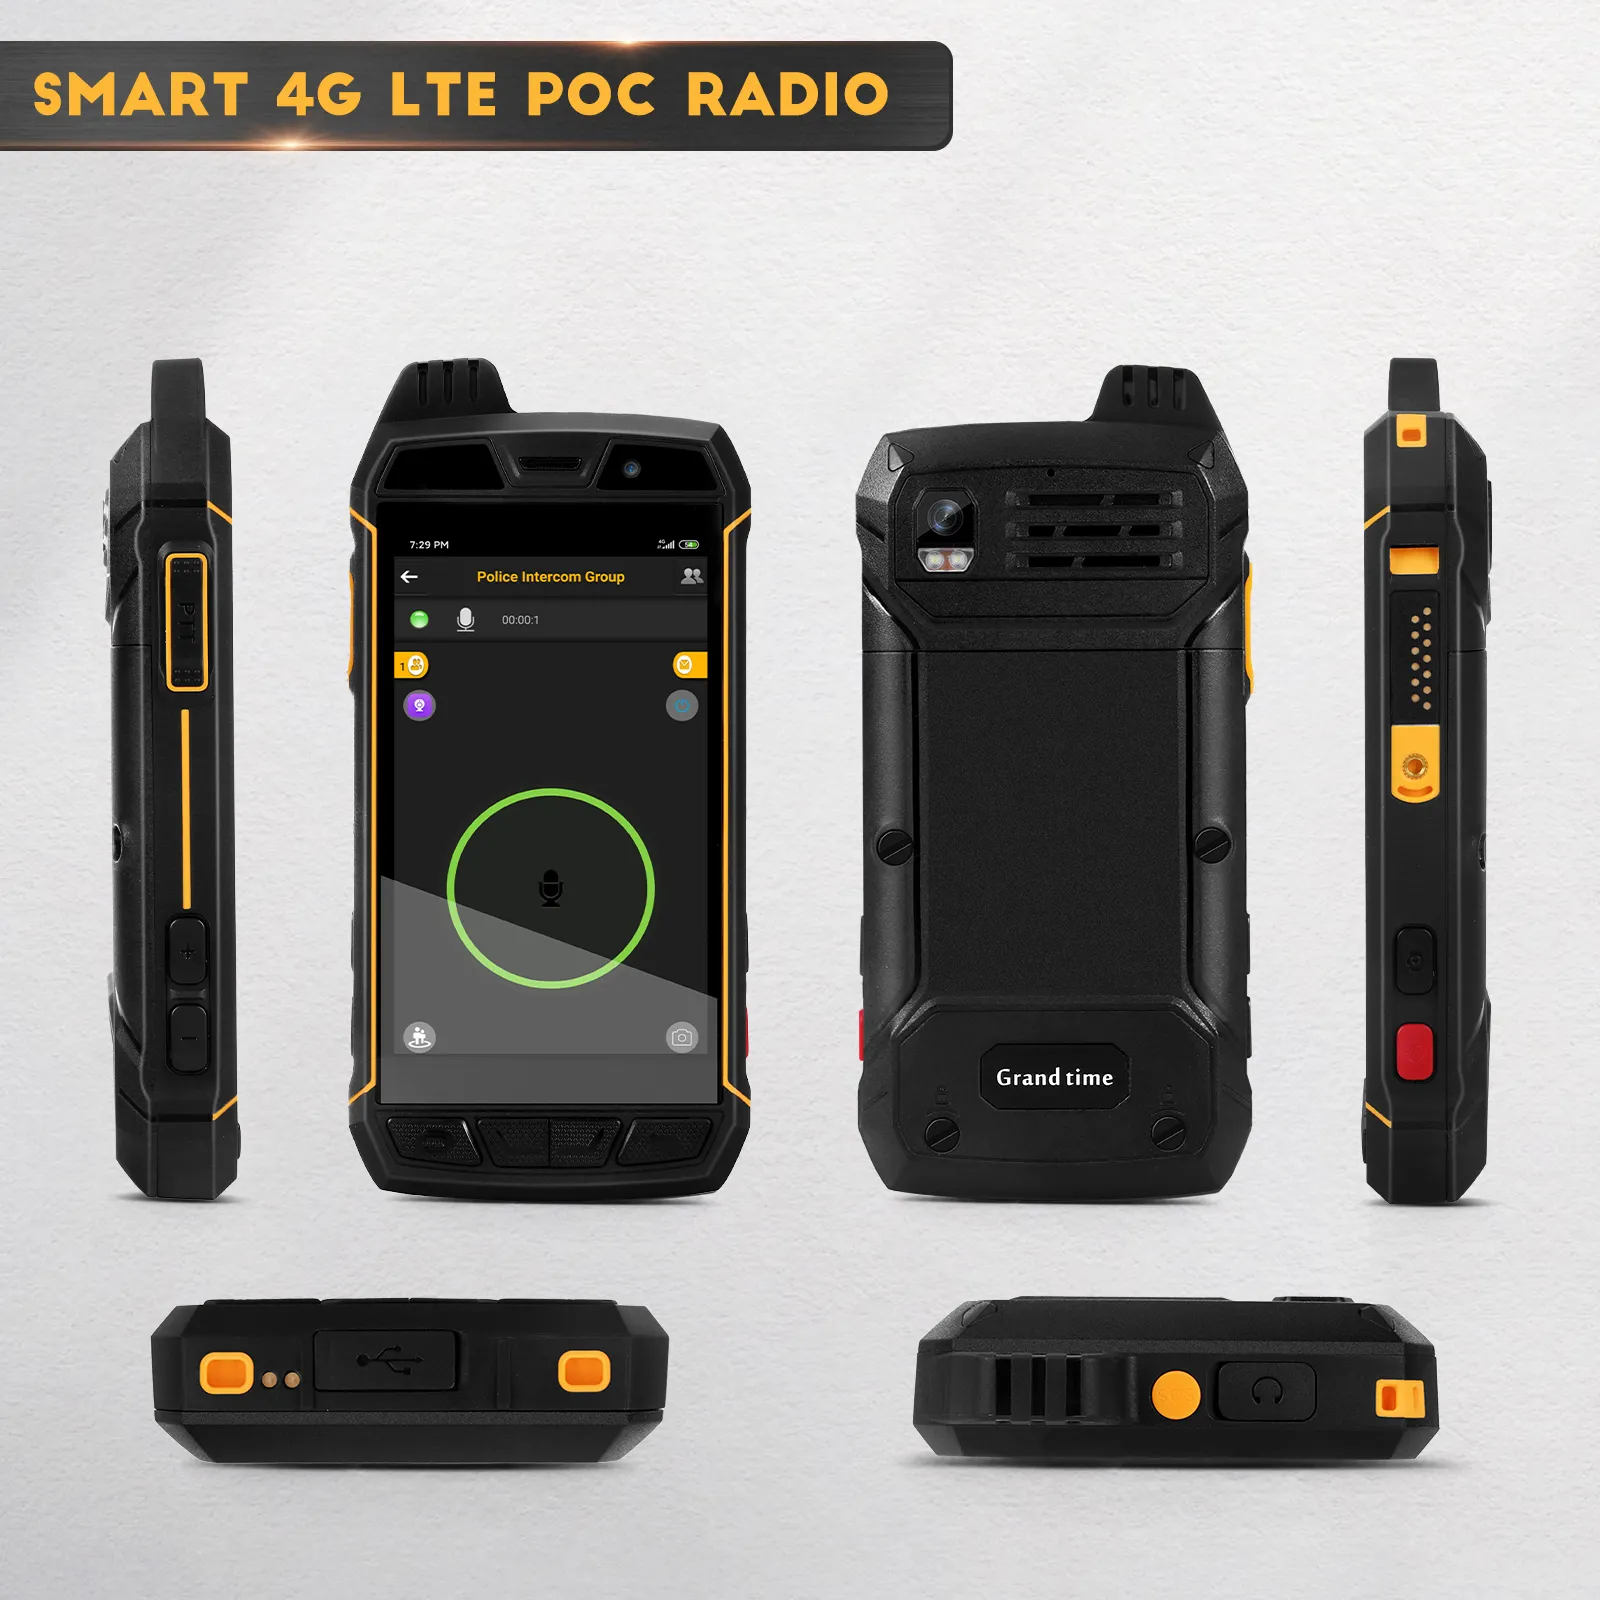 4G сеть радио 5000 мАч Android 9,0 смартфон POC радио LTE WCDMA GSM рация работает реально-PTT Zello 4G LTE радио